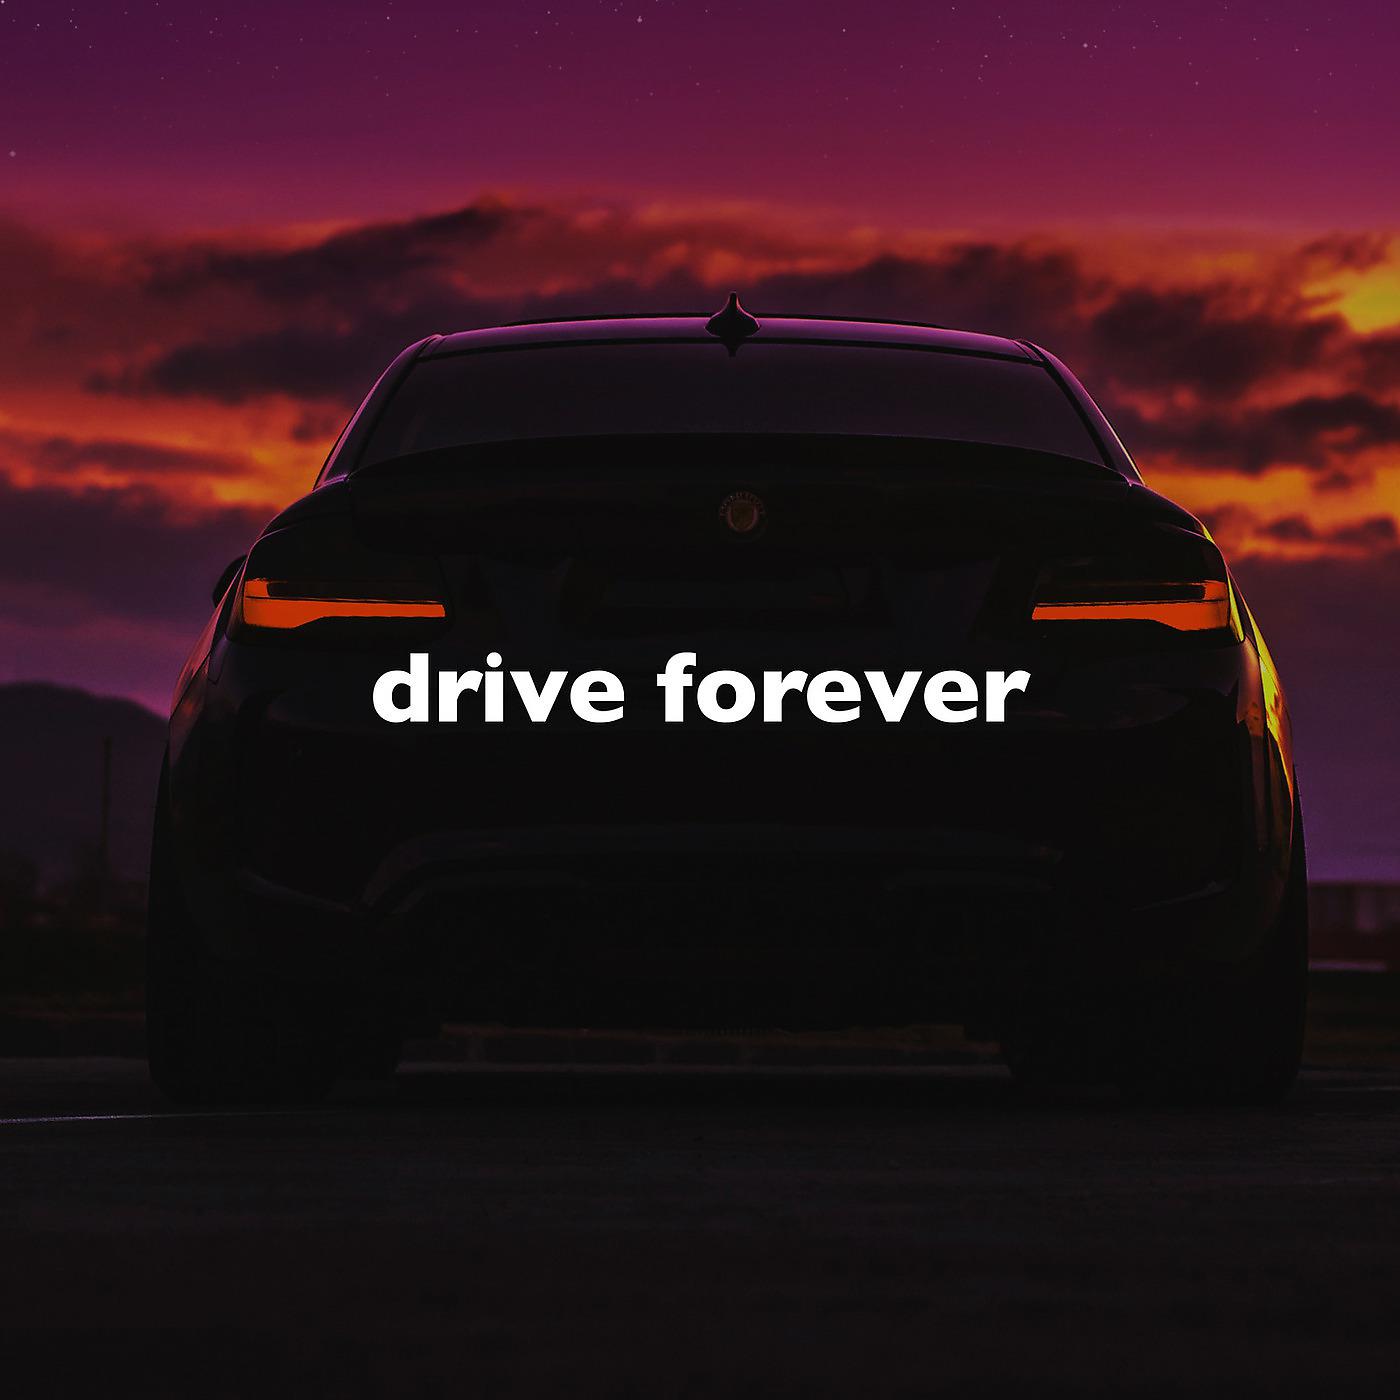 Drive forever slowed. Drive Forever. Drive Forever Forever. Drive in Codeine Forever. Drive Forever Felax.